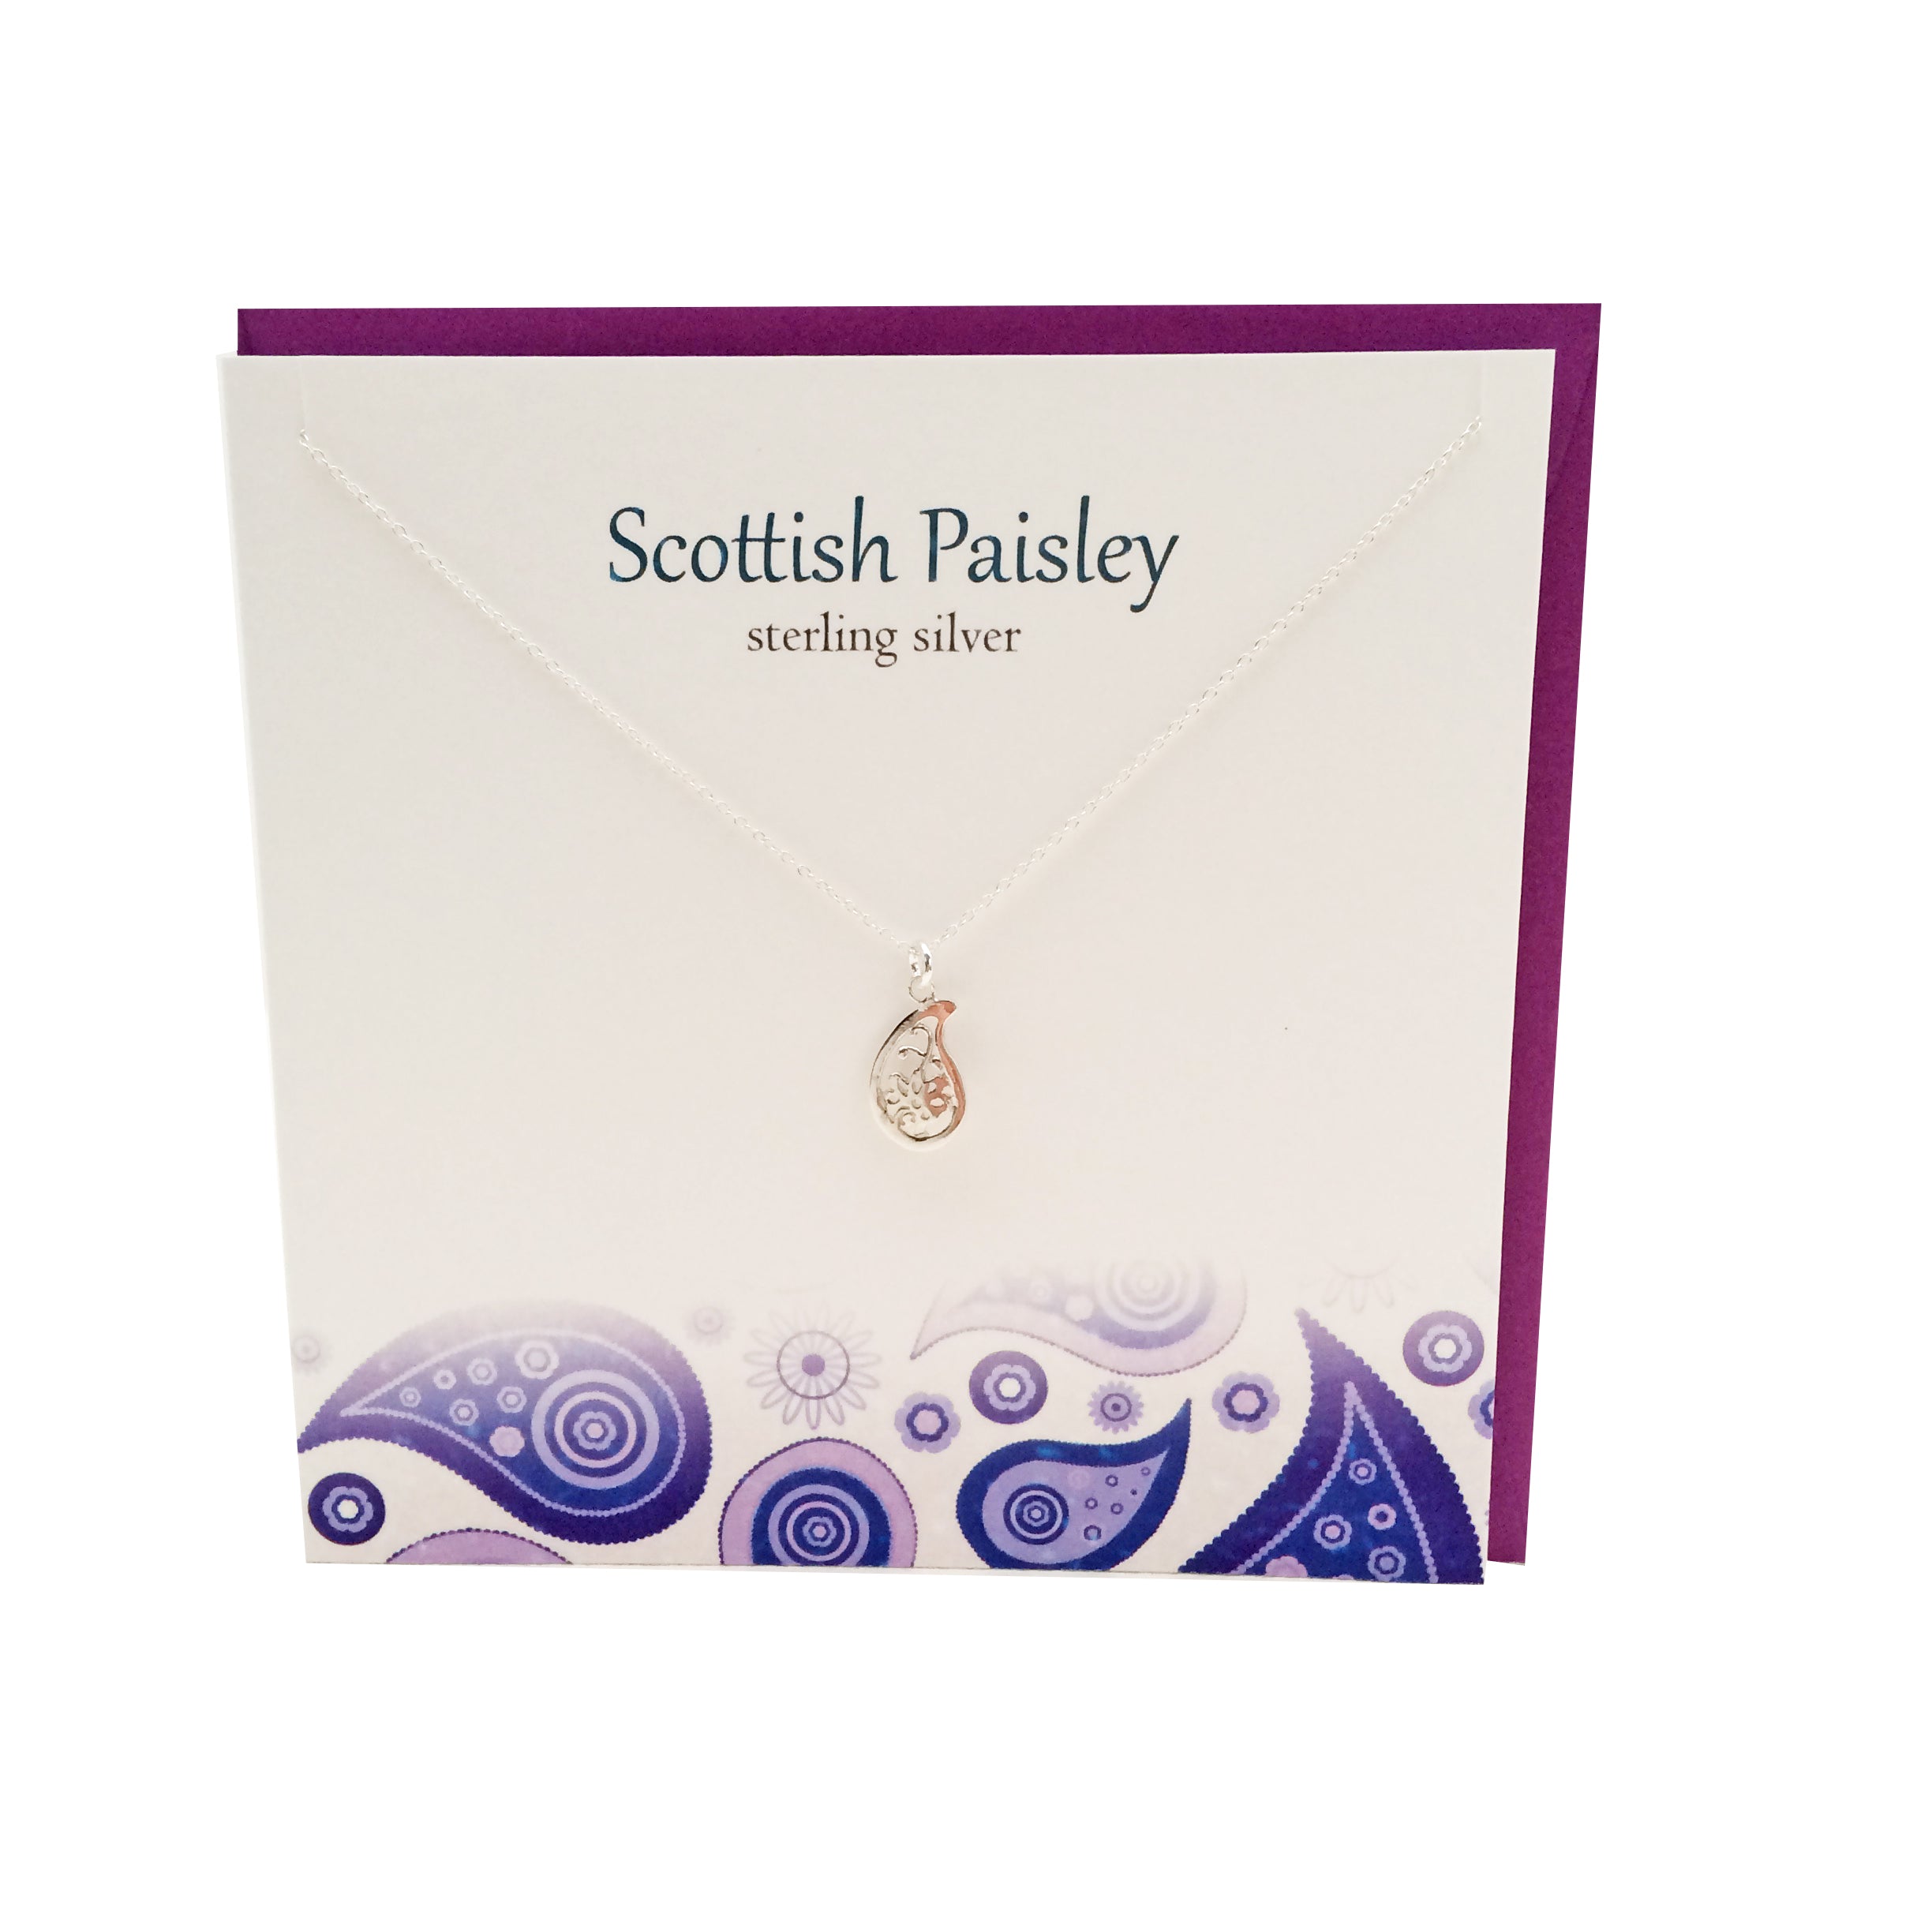 Scottish Paisley pendant